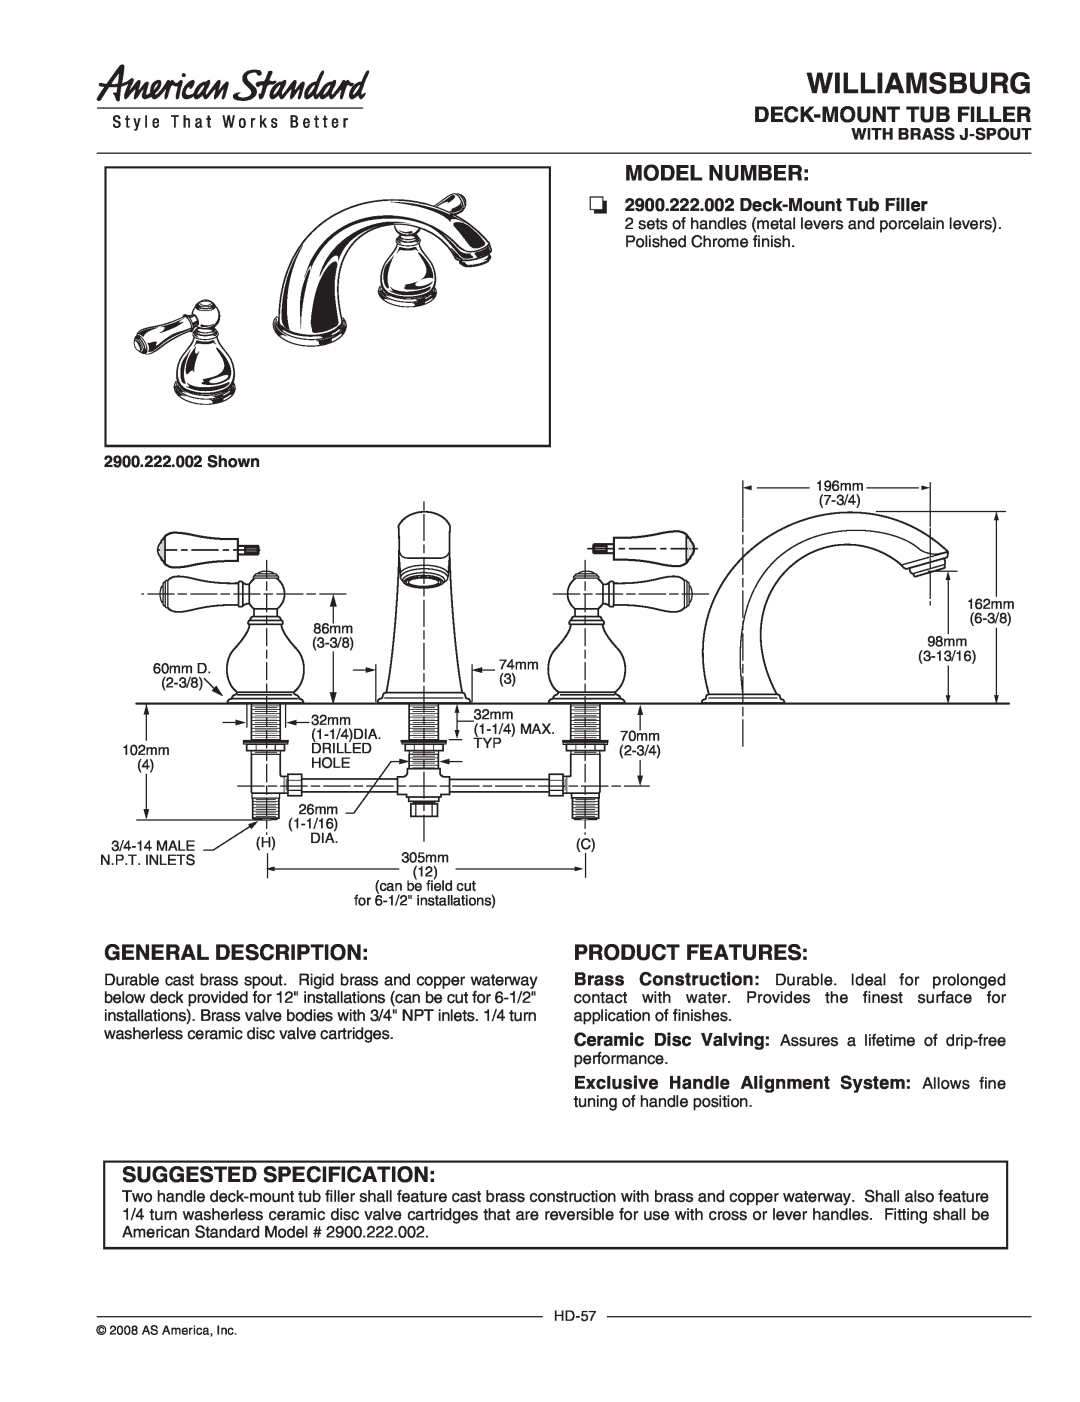 American Standard 2900.222.002 manual Williamsburg, Deck-Mounttub Filler, Model Number, General Description, Shown 